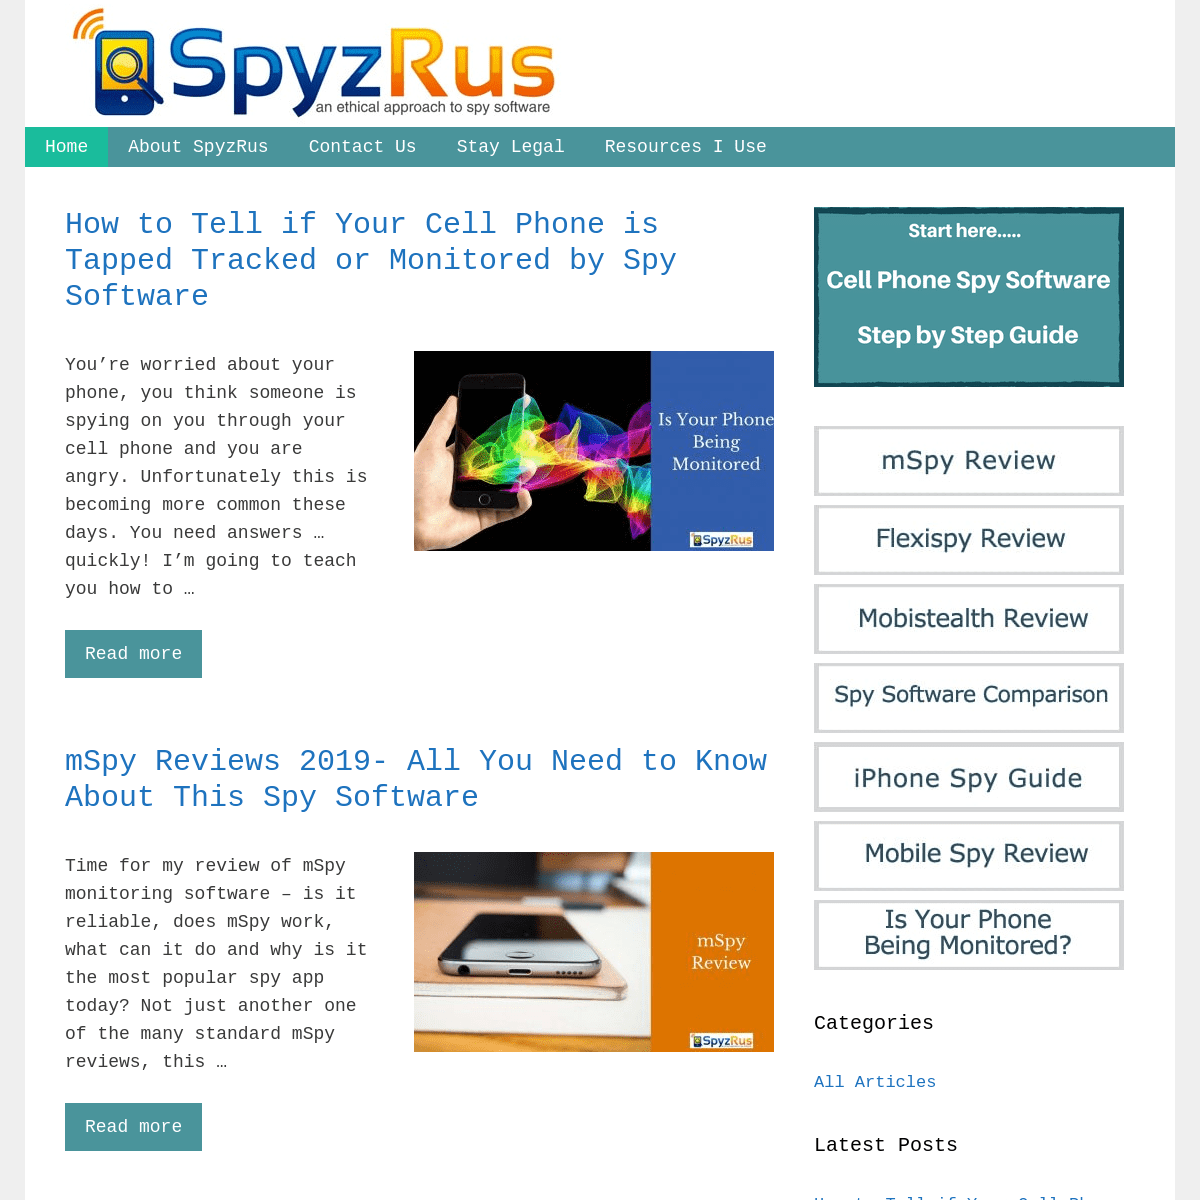 A complete backup of spyzrus.net